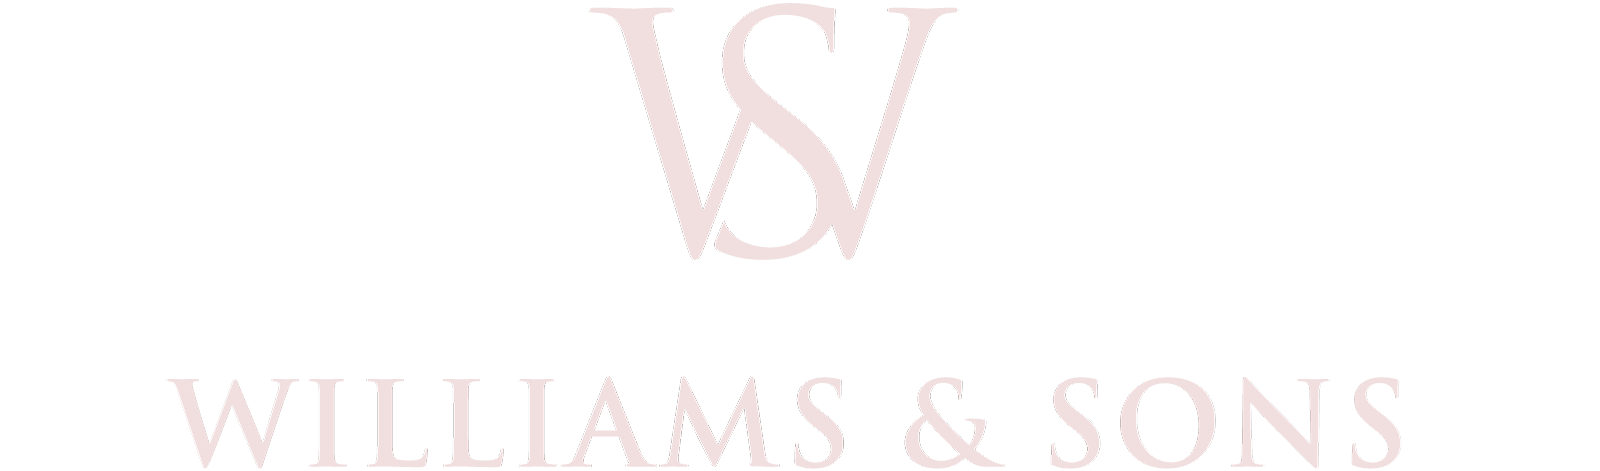 Williams & Sons